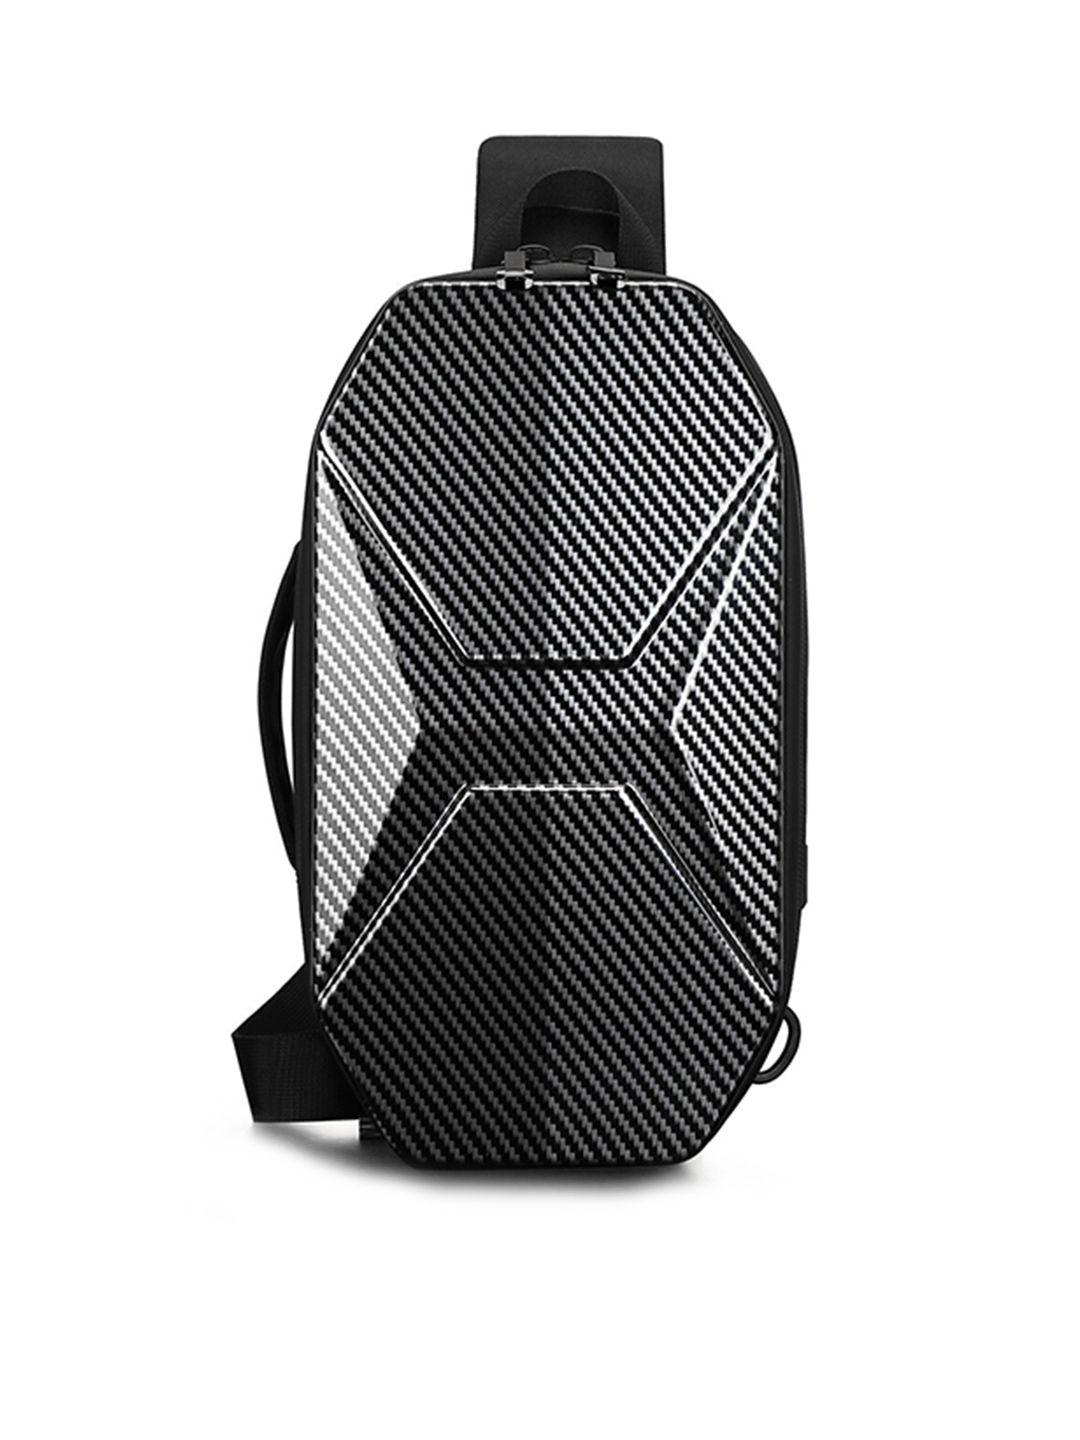 ozuko eco vista gear carbon fiber soft one size backpack